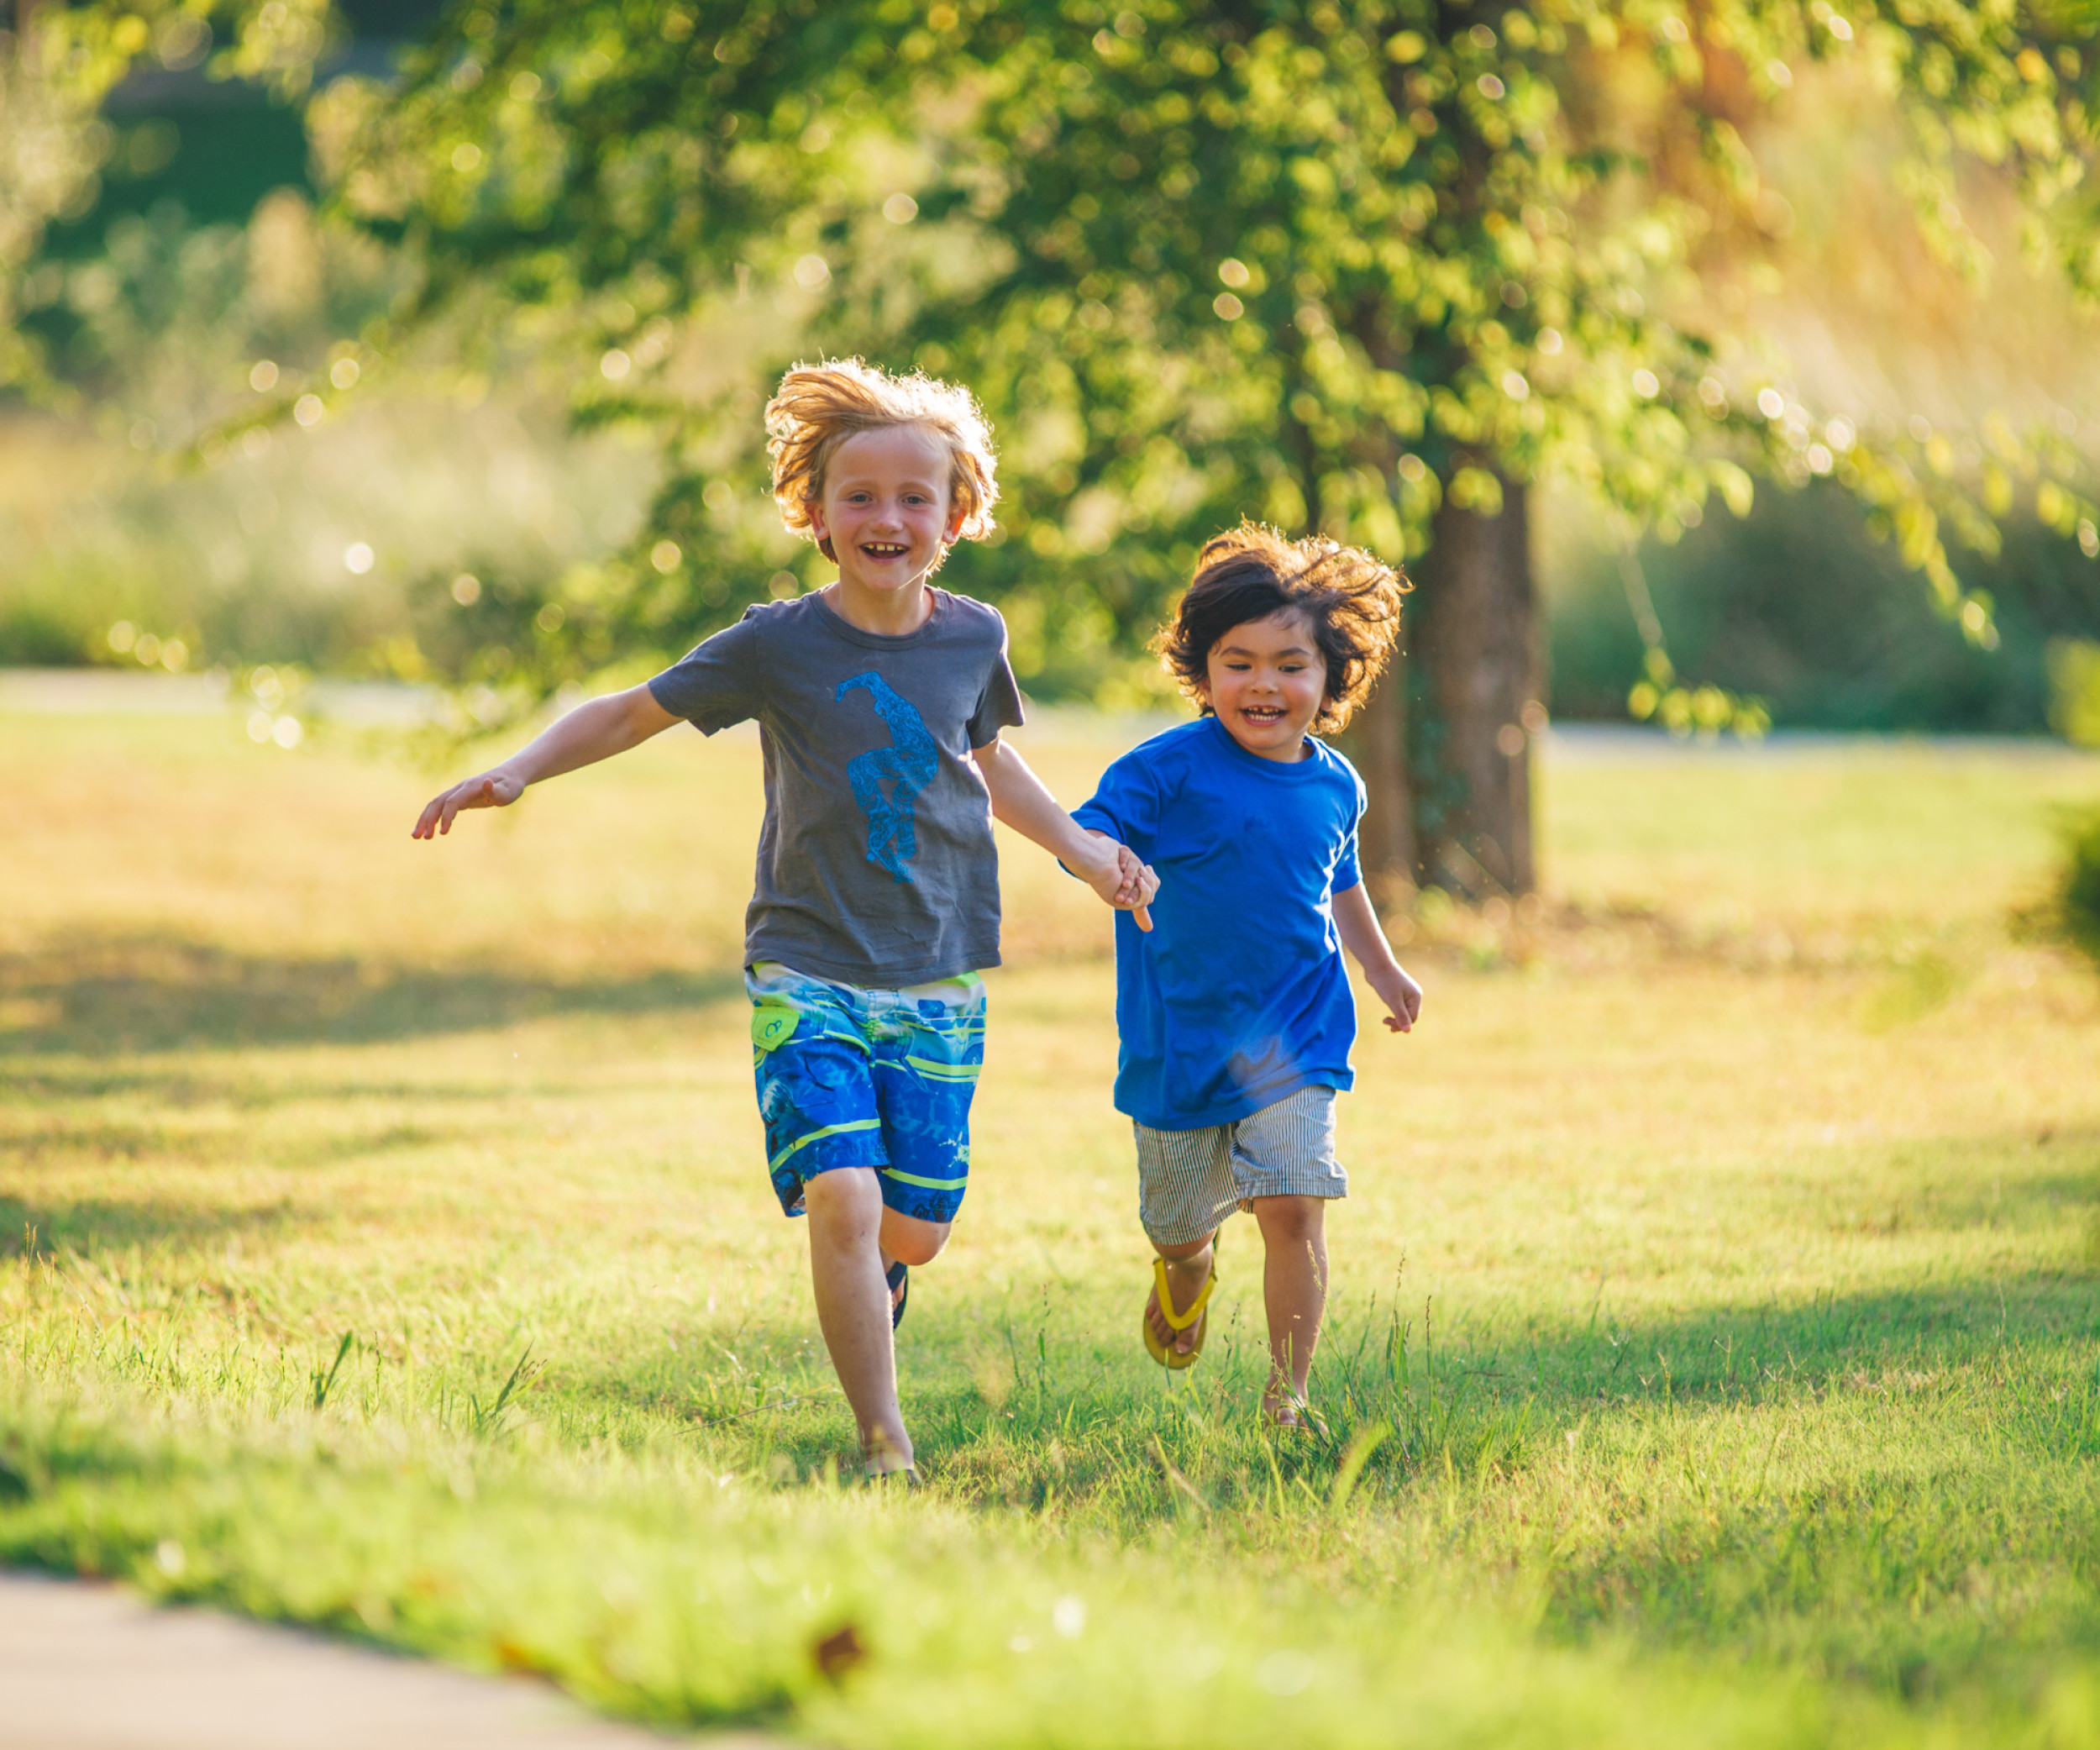 Two kids running in a field